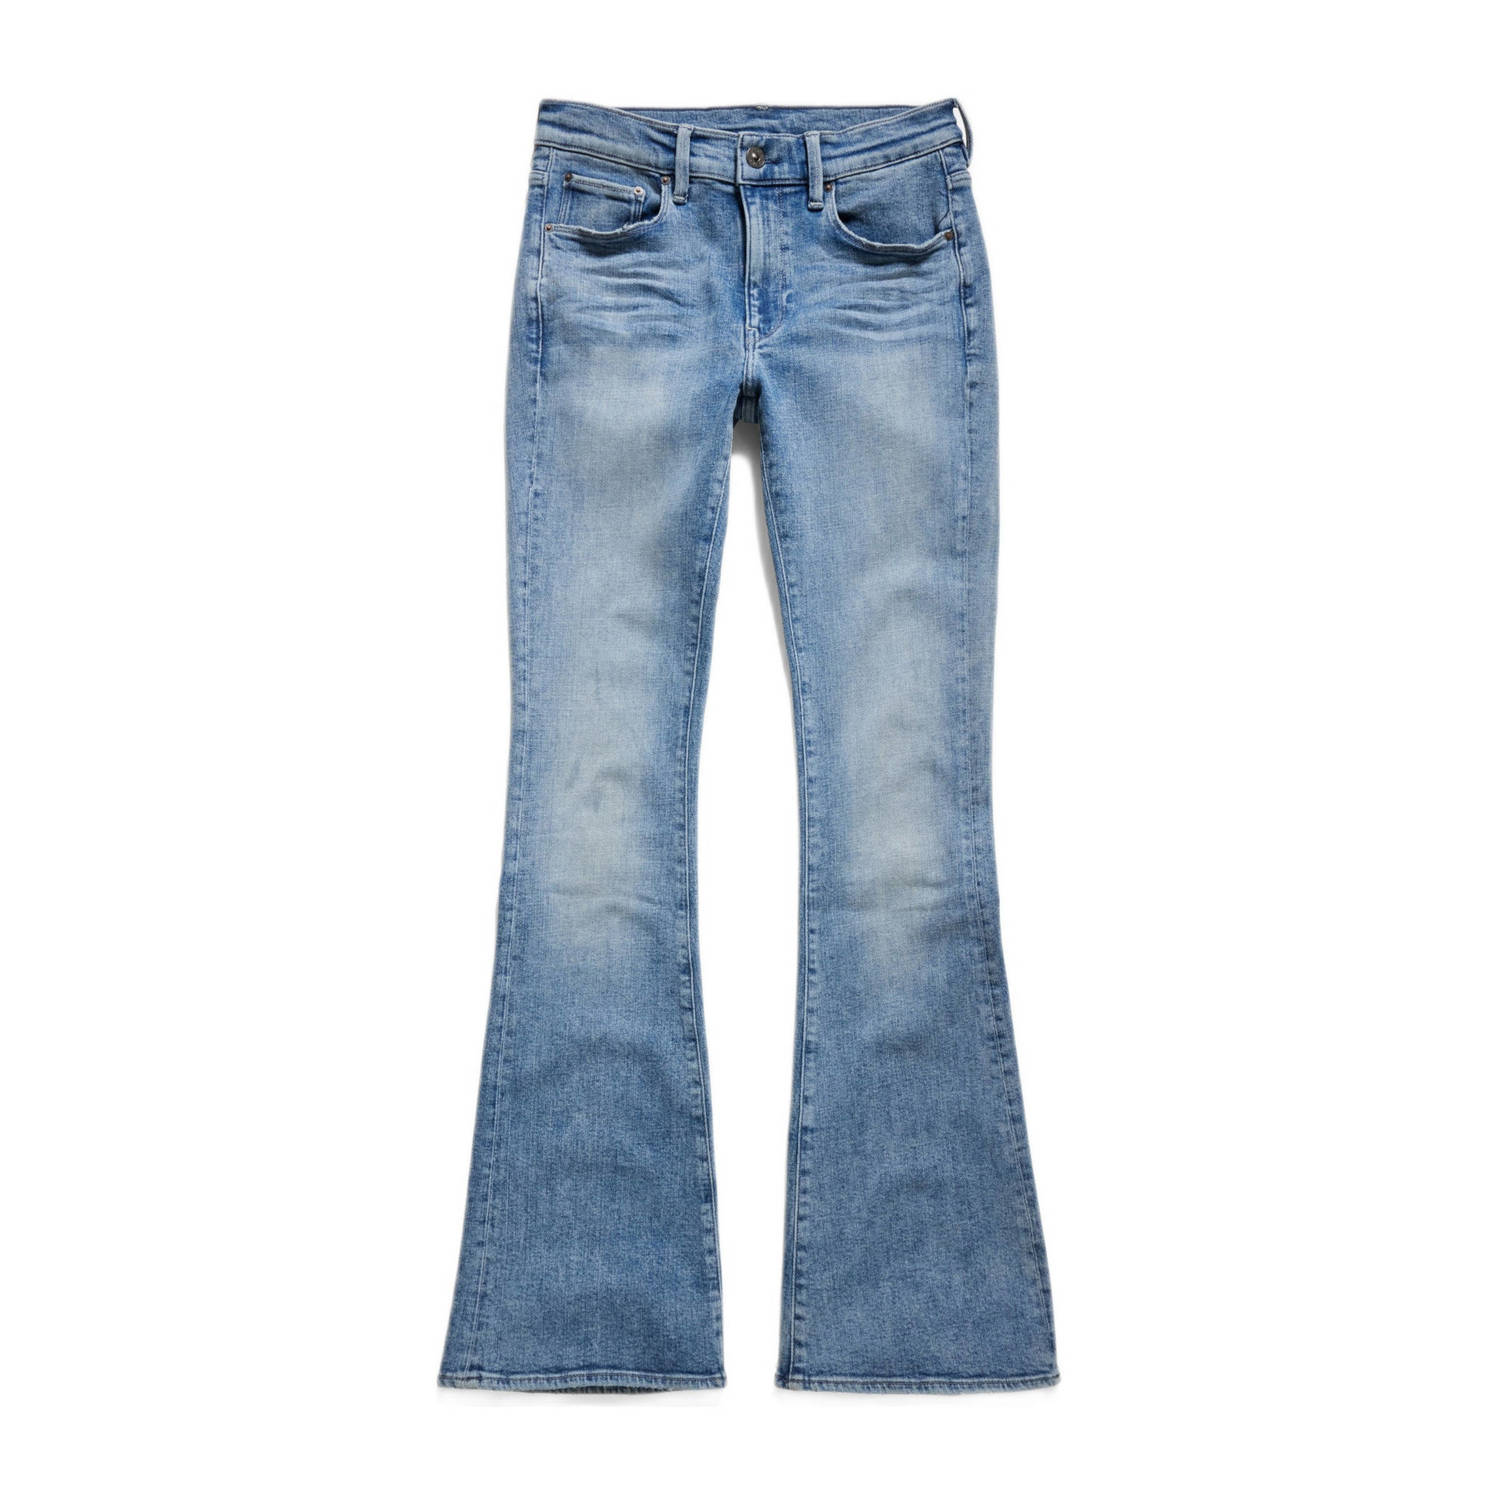 G-Star RAW 3301 flared jeans sun faded nubay blue